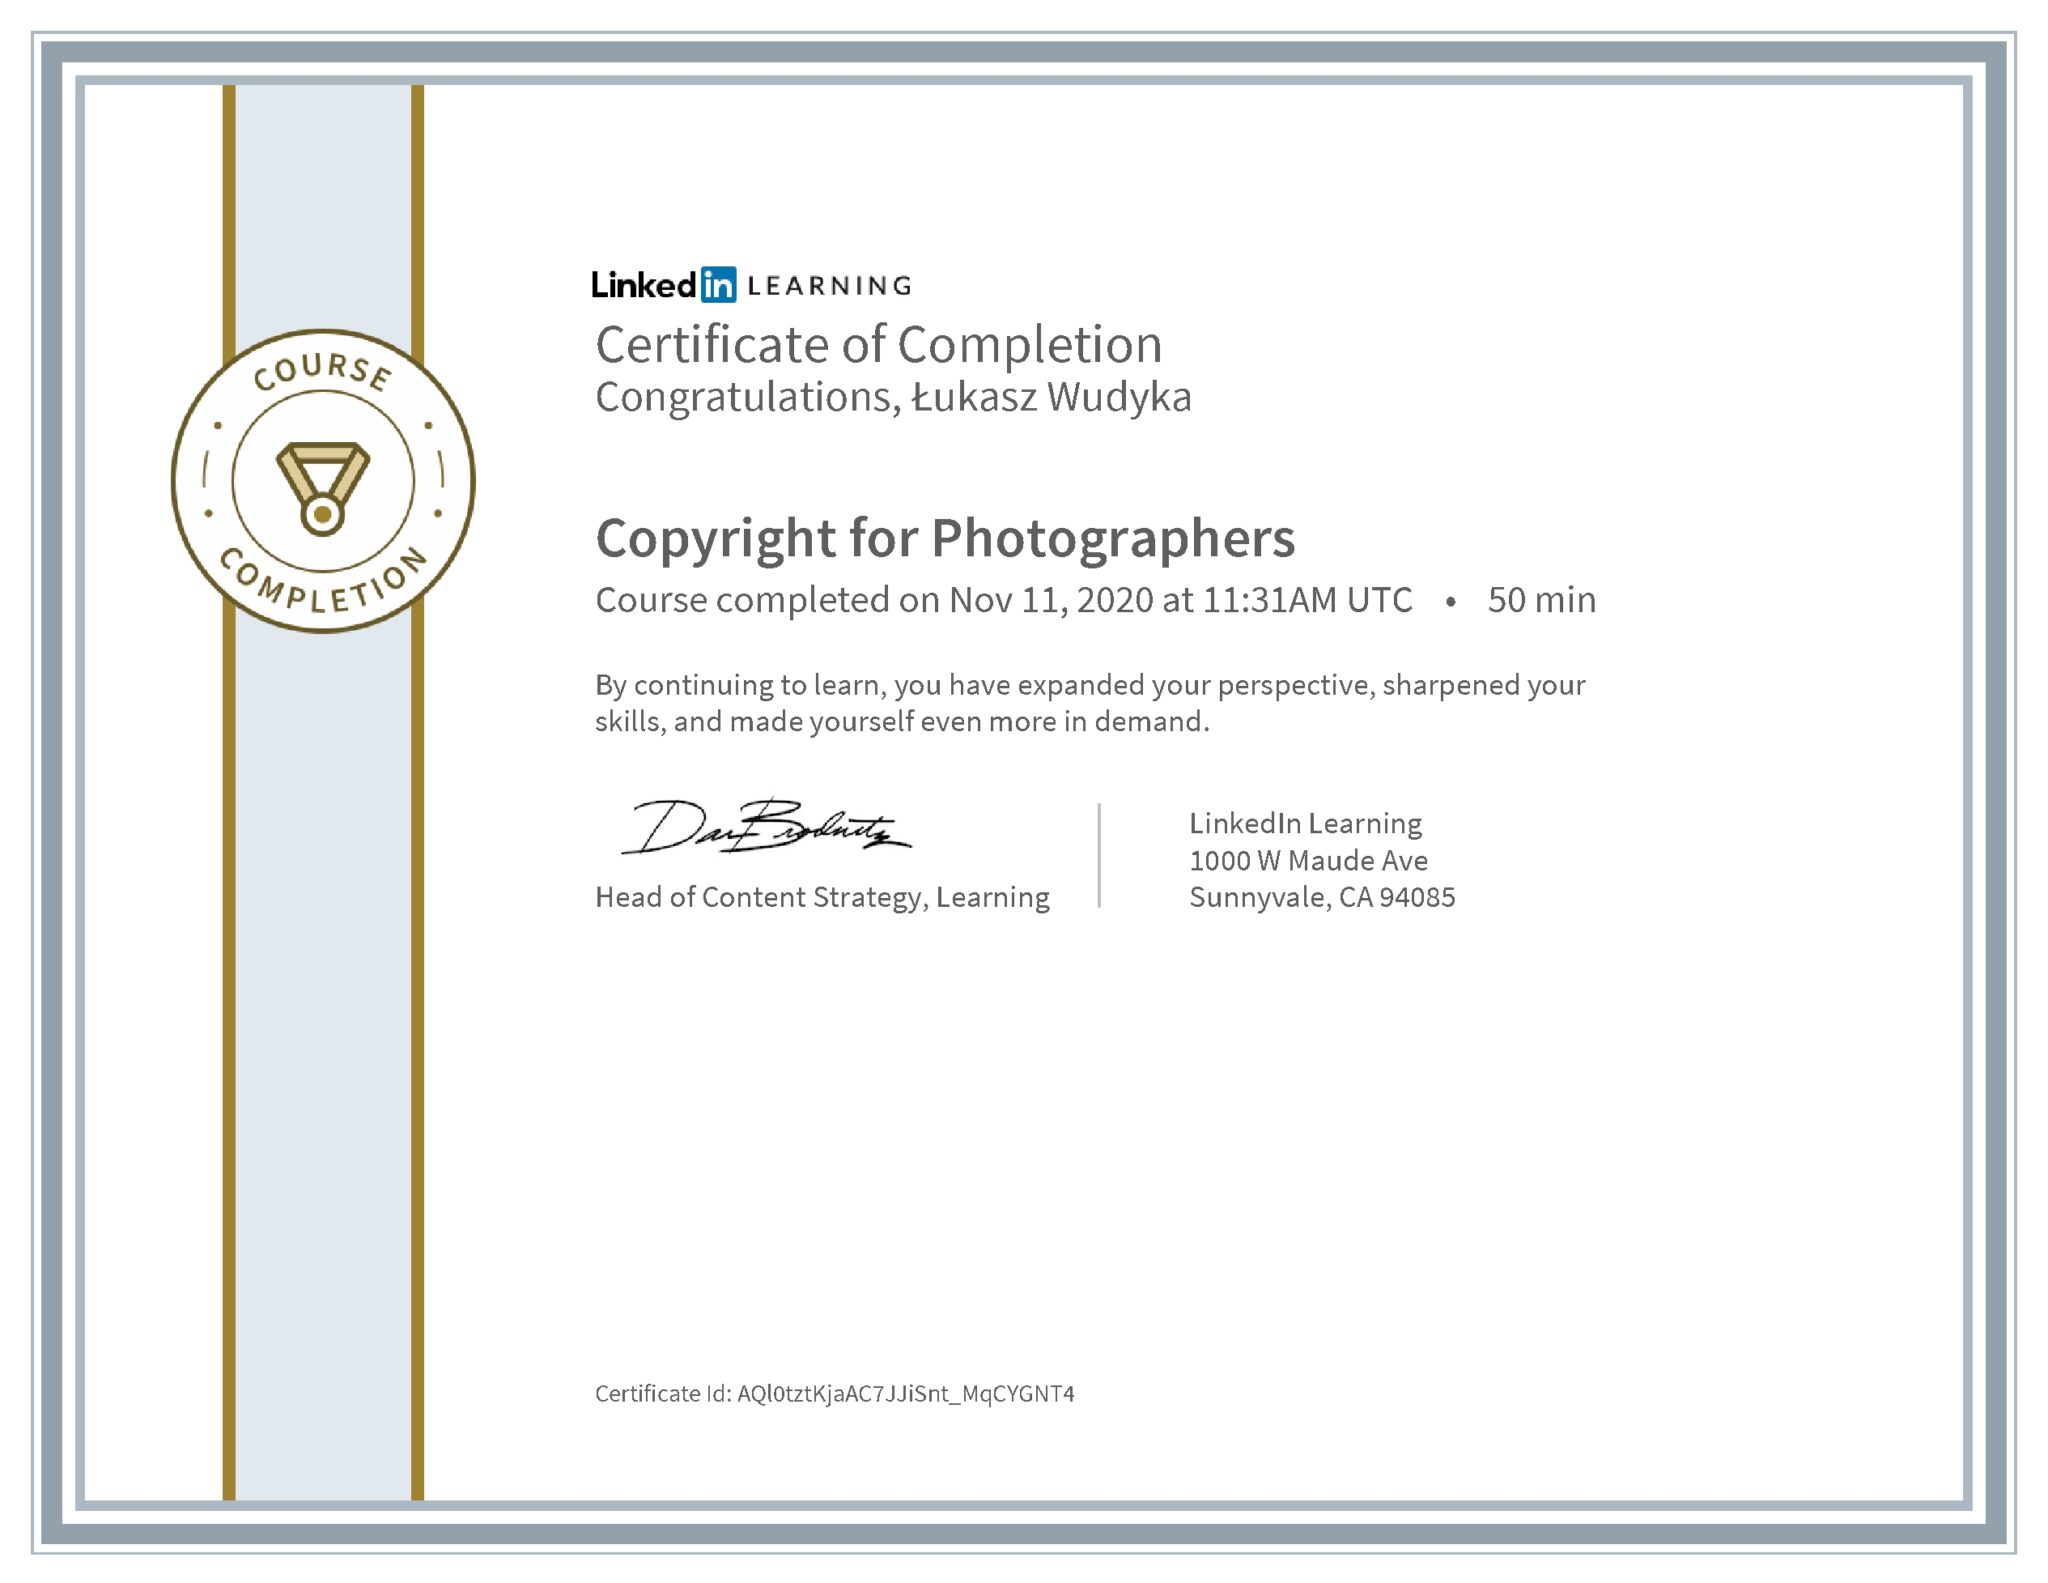 Łukasz Wudyka certyfikat LinkedIn Copyright for Photographers